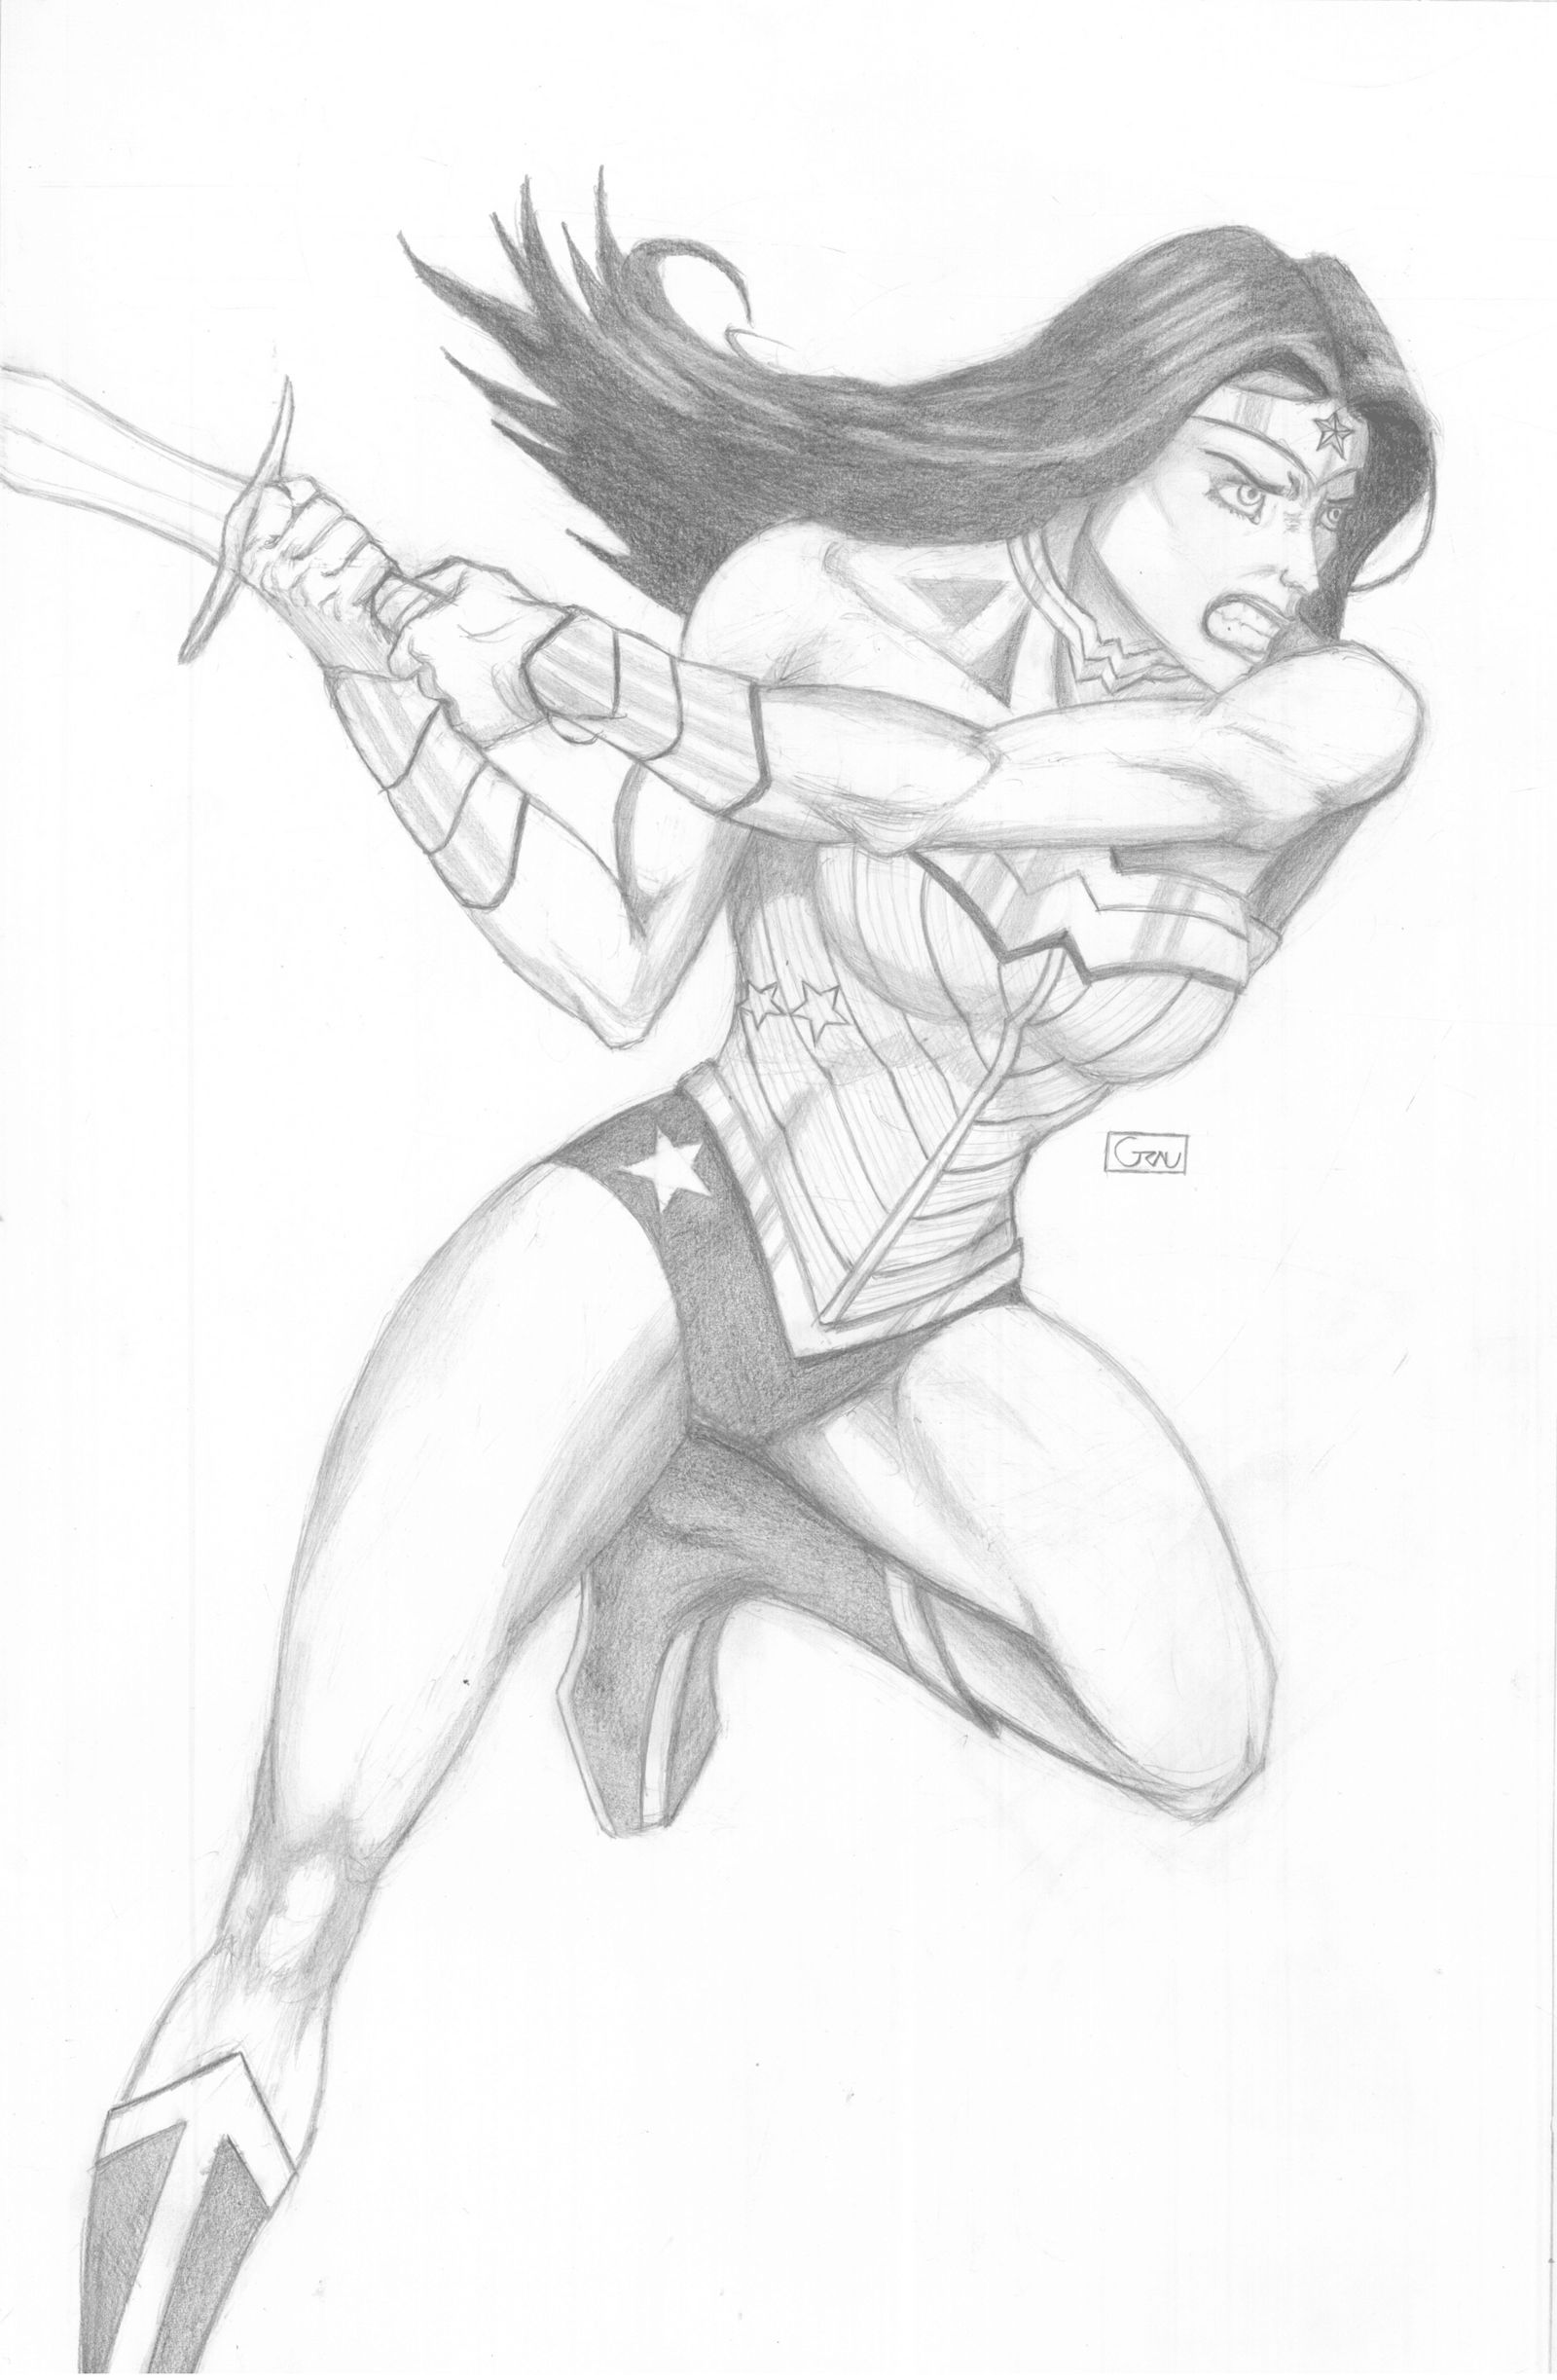 Wonder Woman Commission